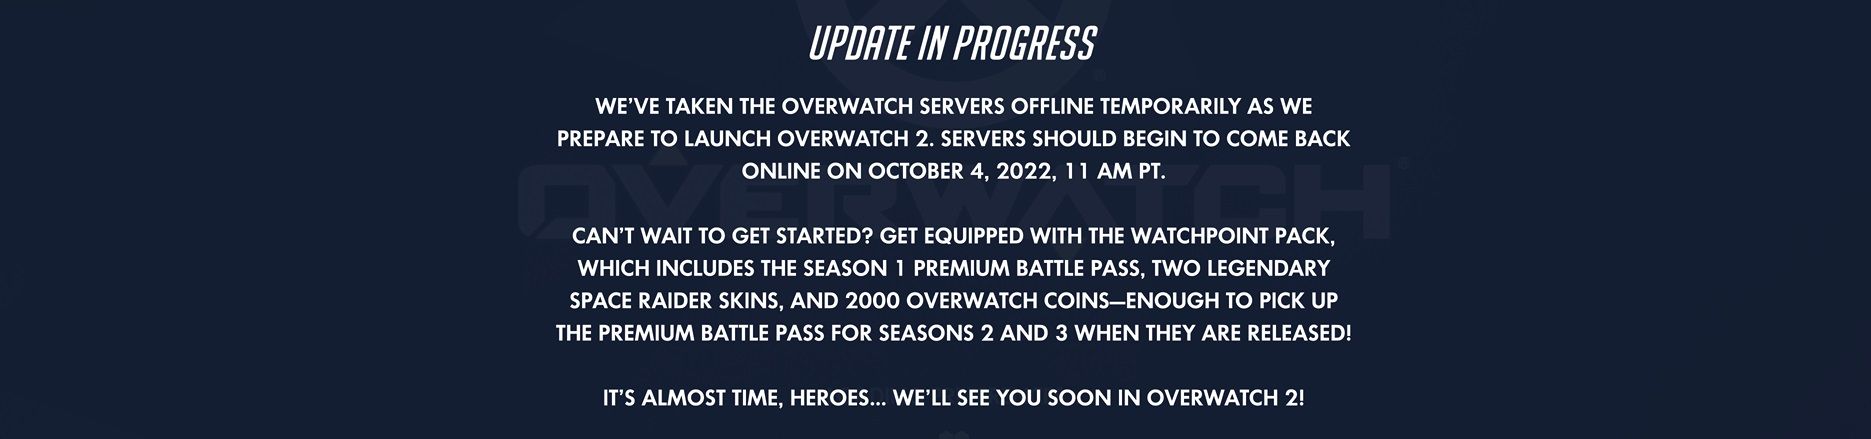 overwatch 1 servers down